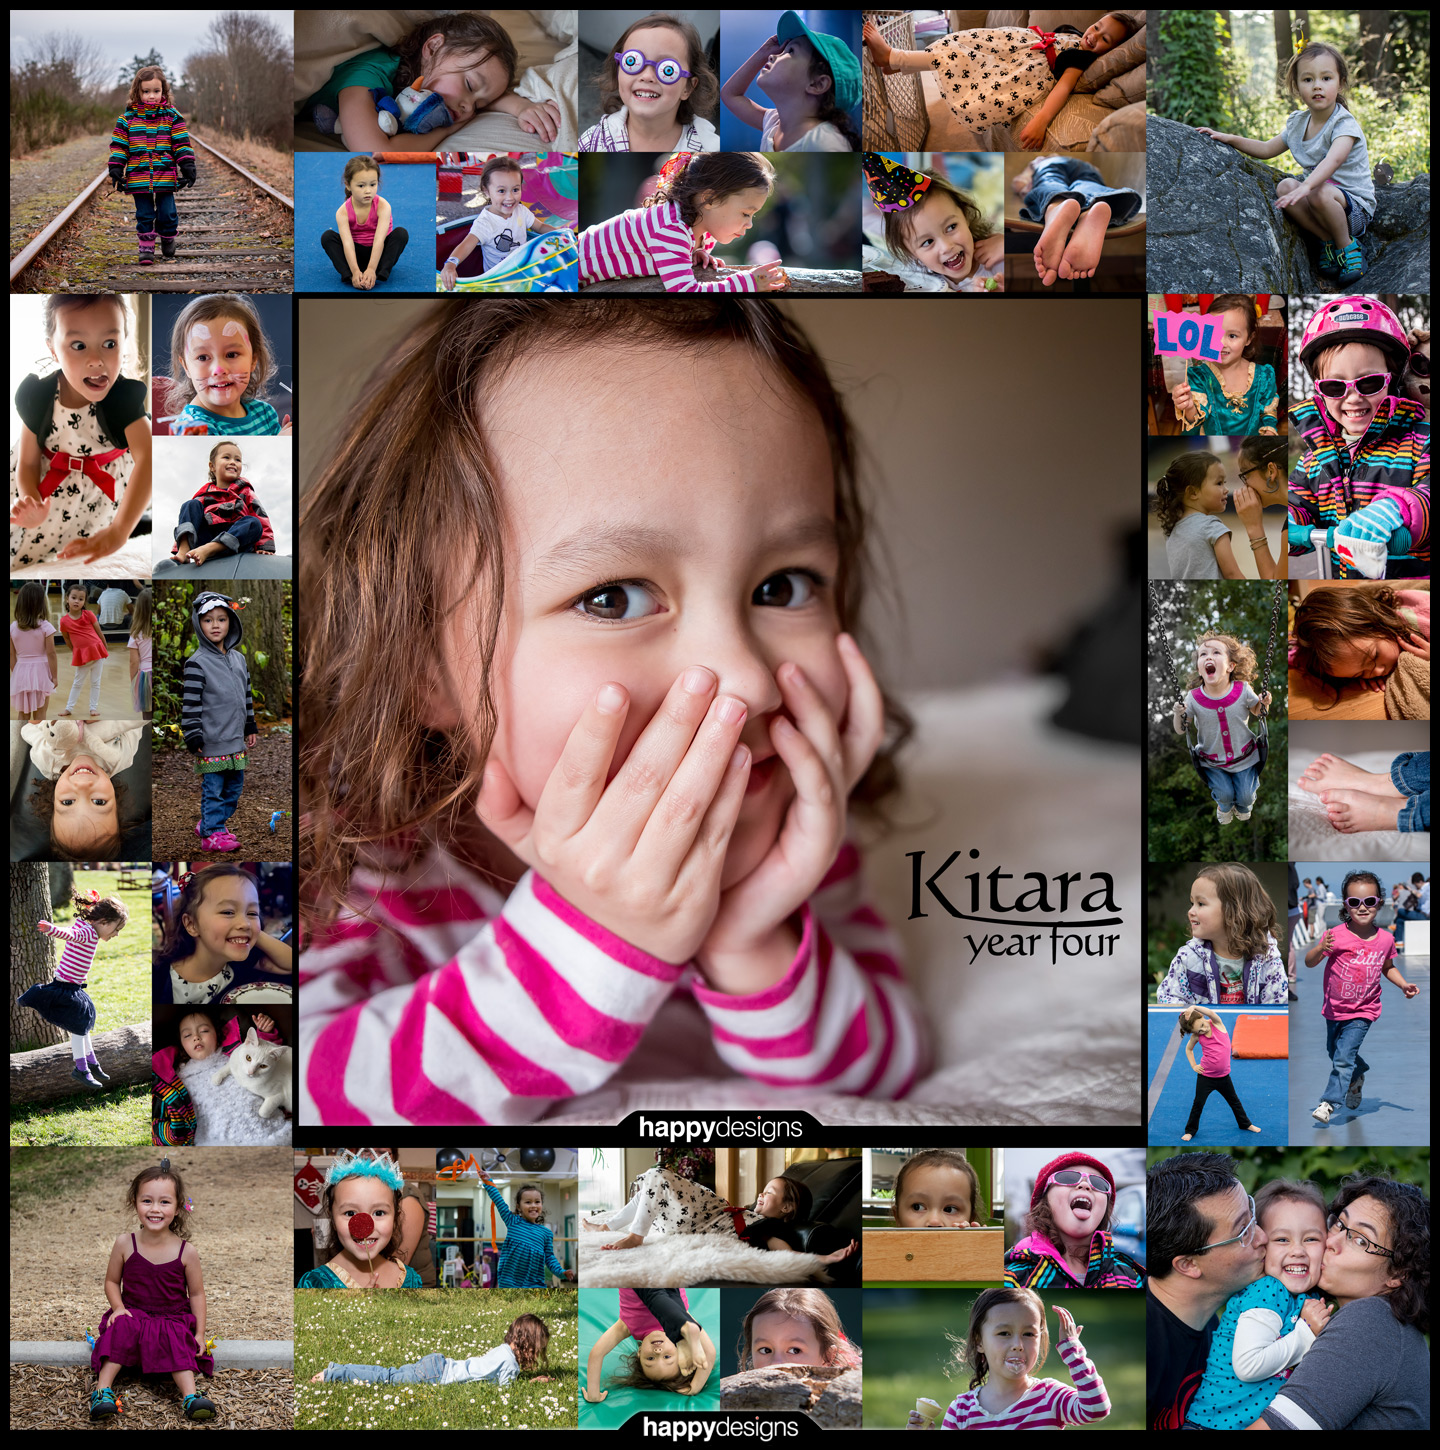 20140603 - Kitara - year four